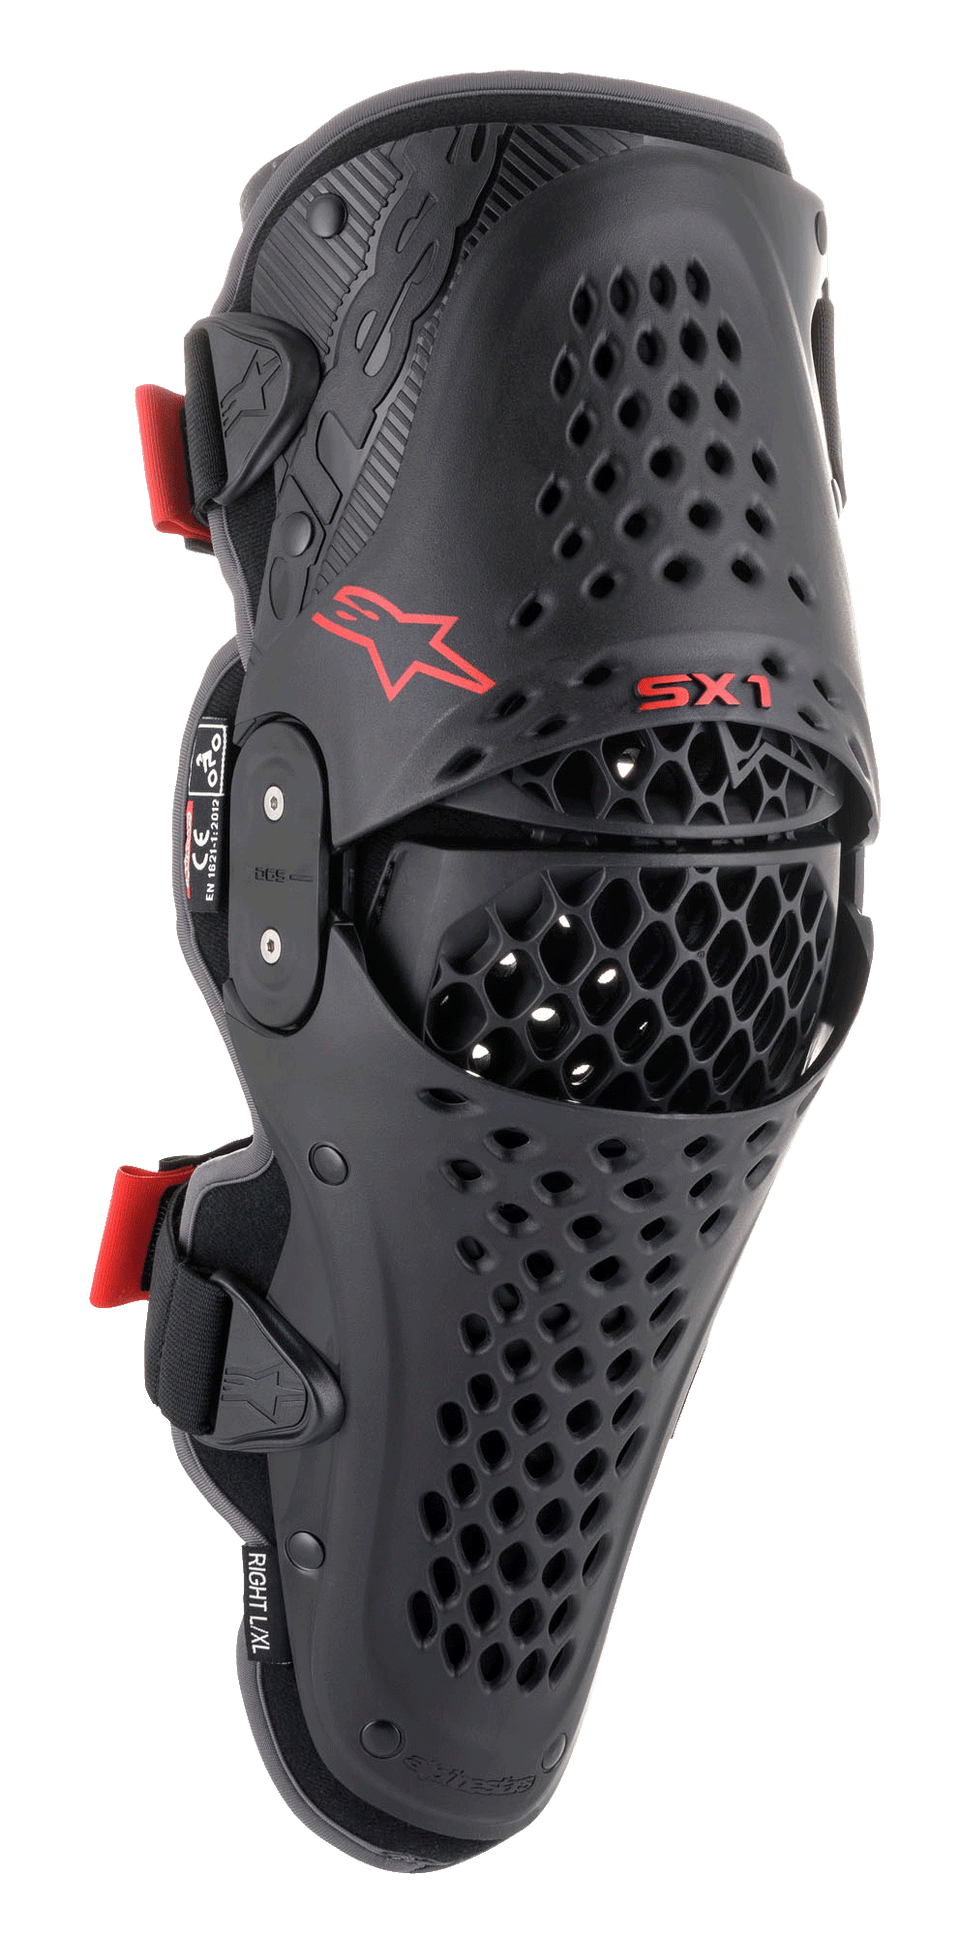 SX-1 V2 Knee Protector